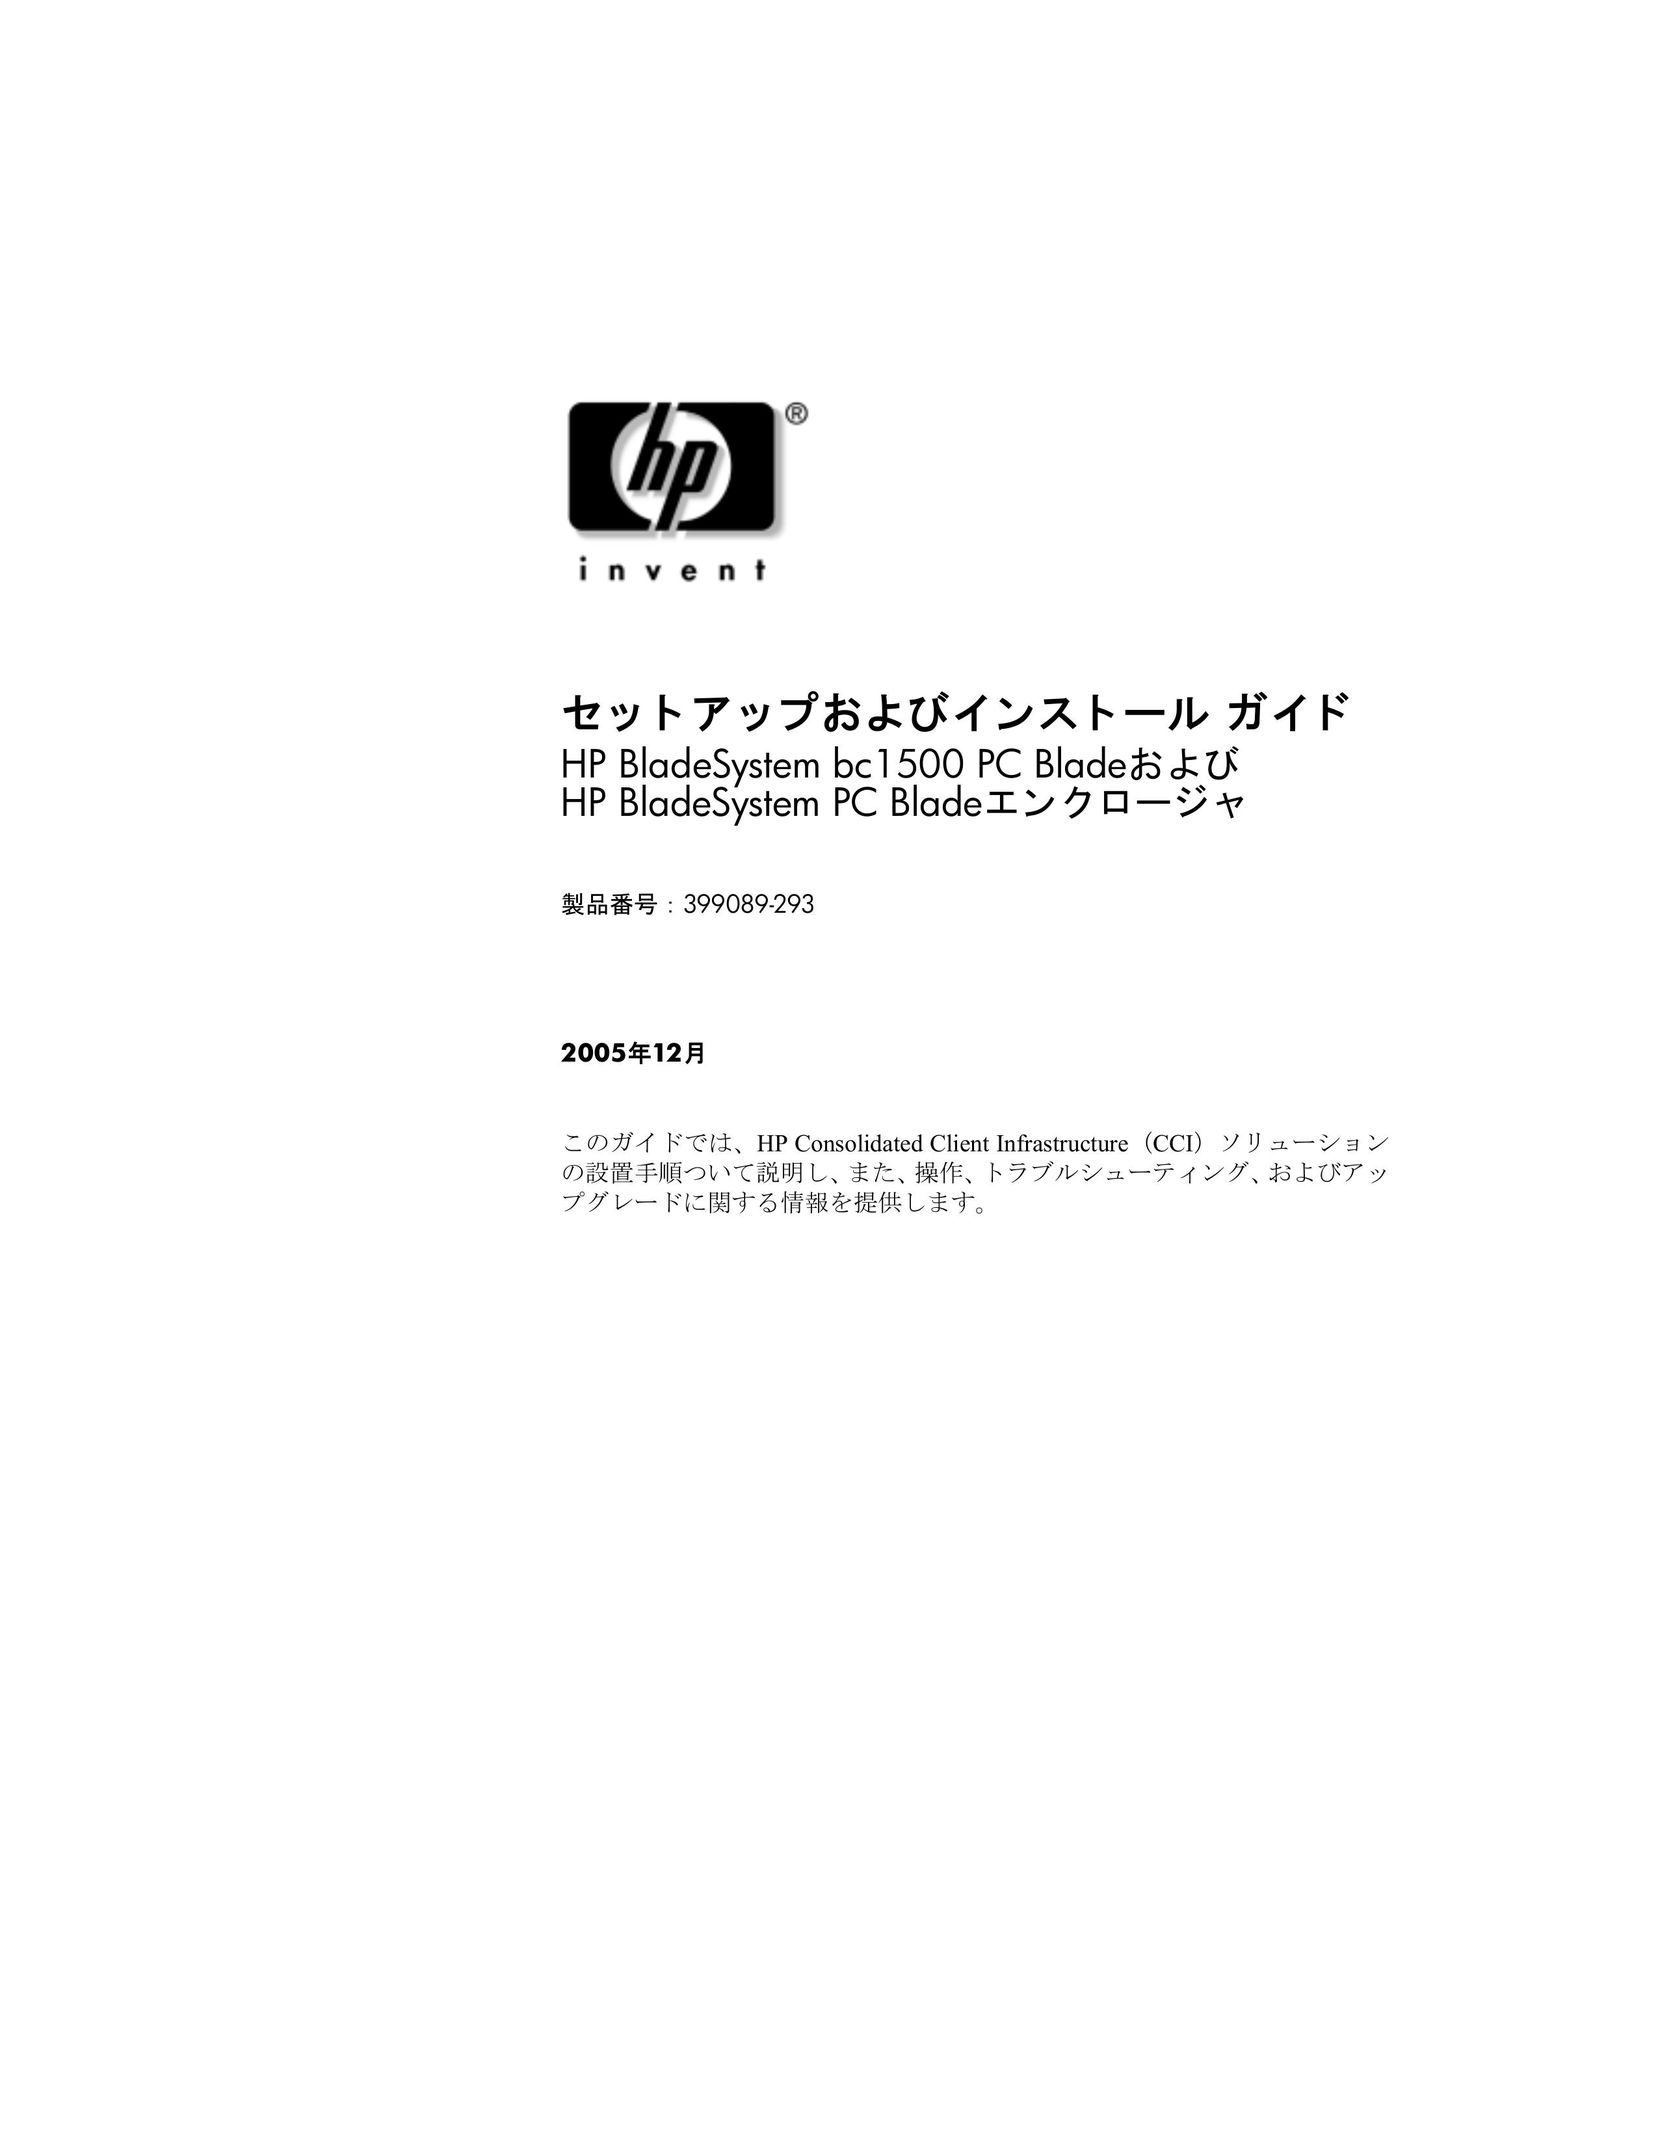 HP (Hewlett-Packard) BC1500 Computer Accessories User Manual